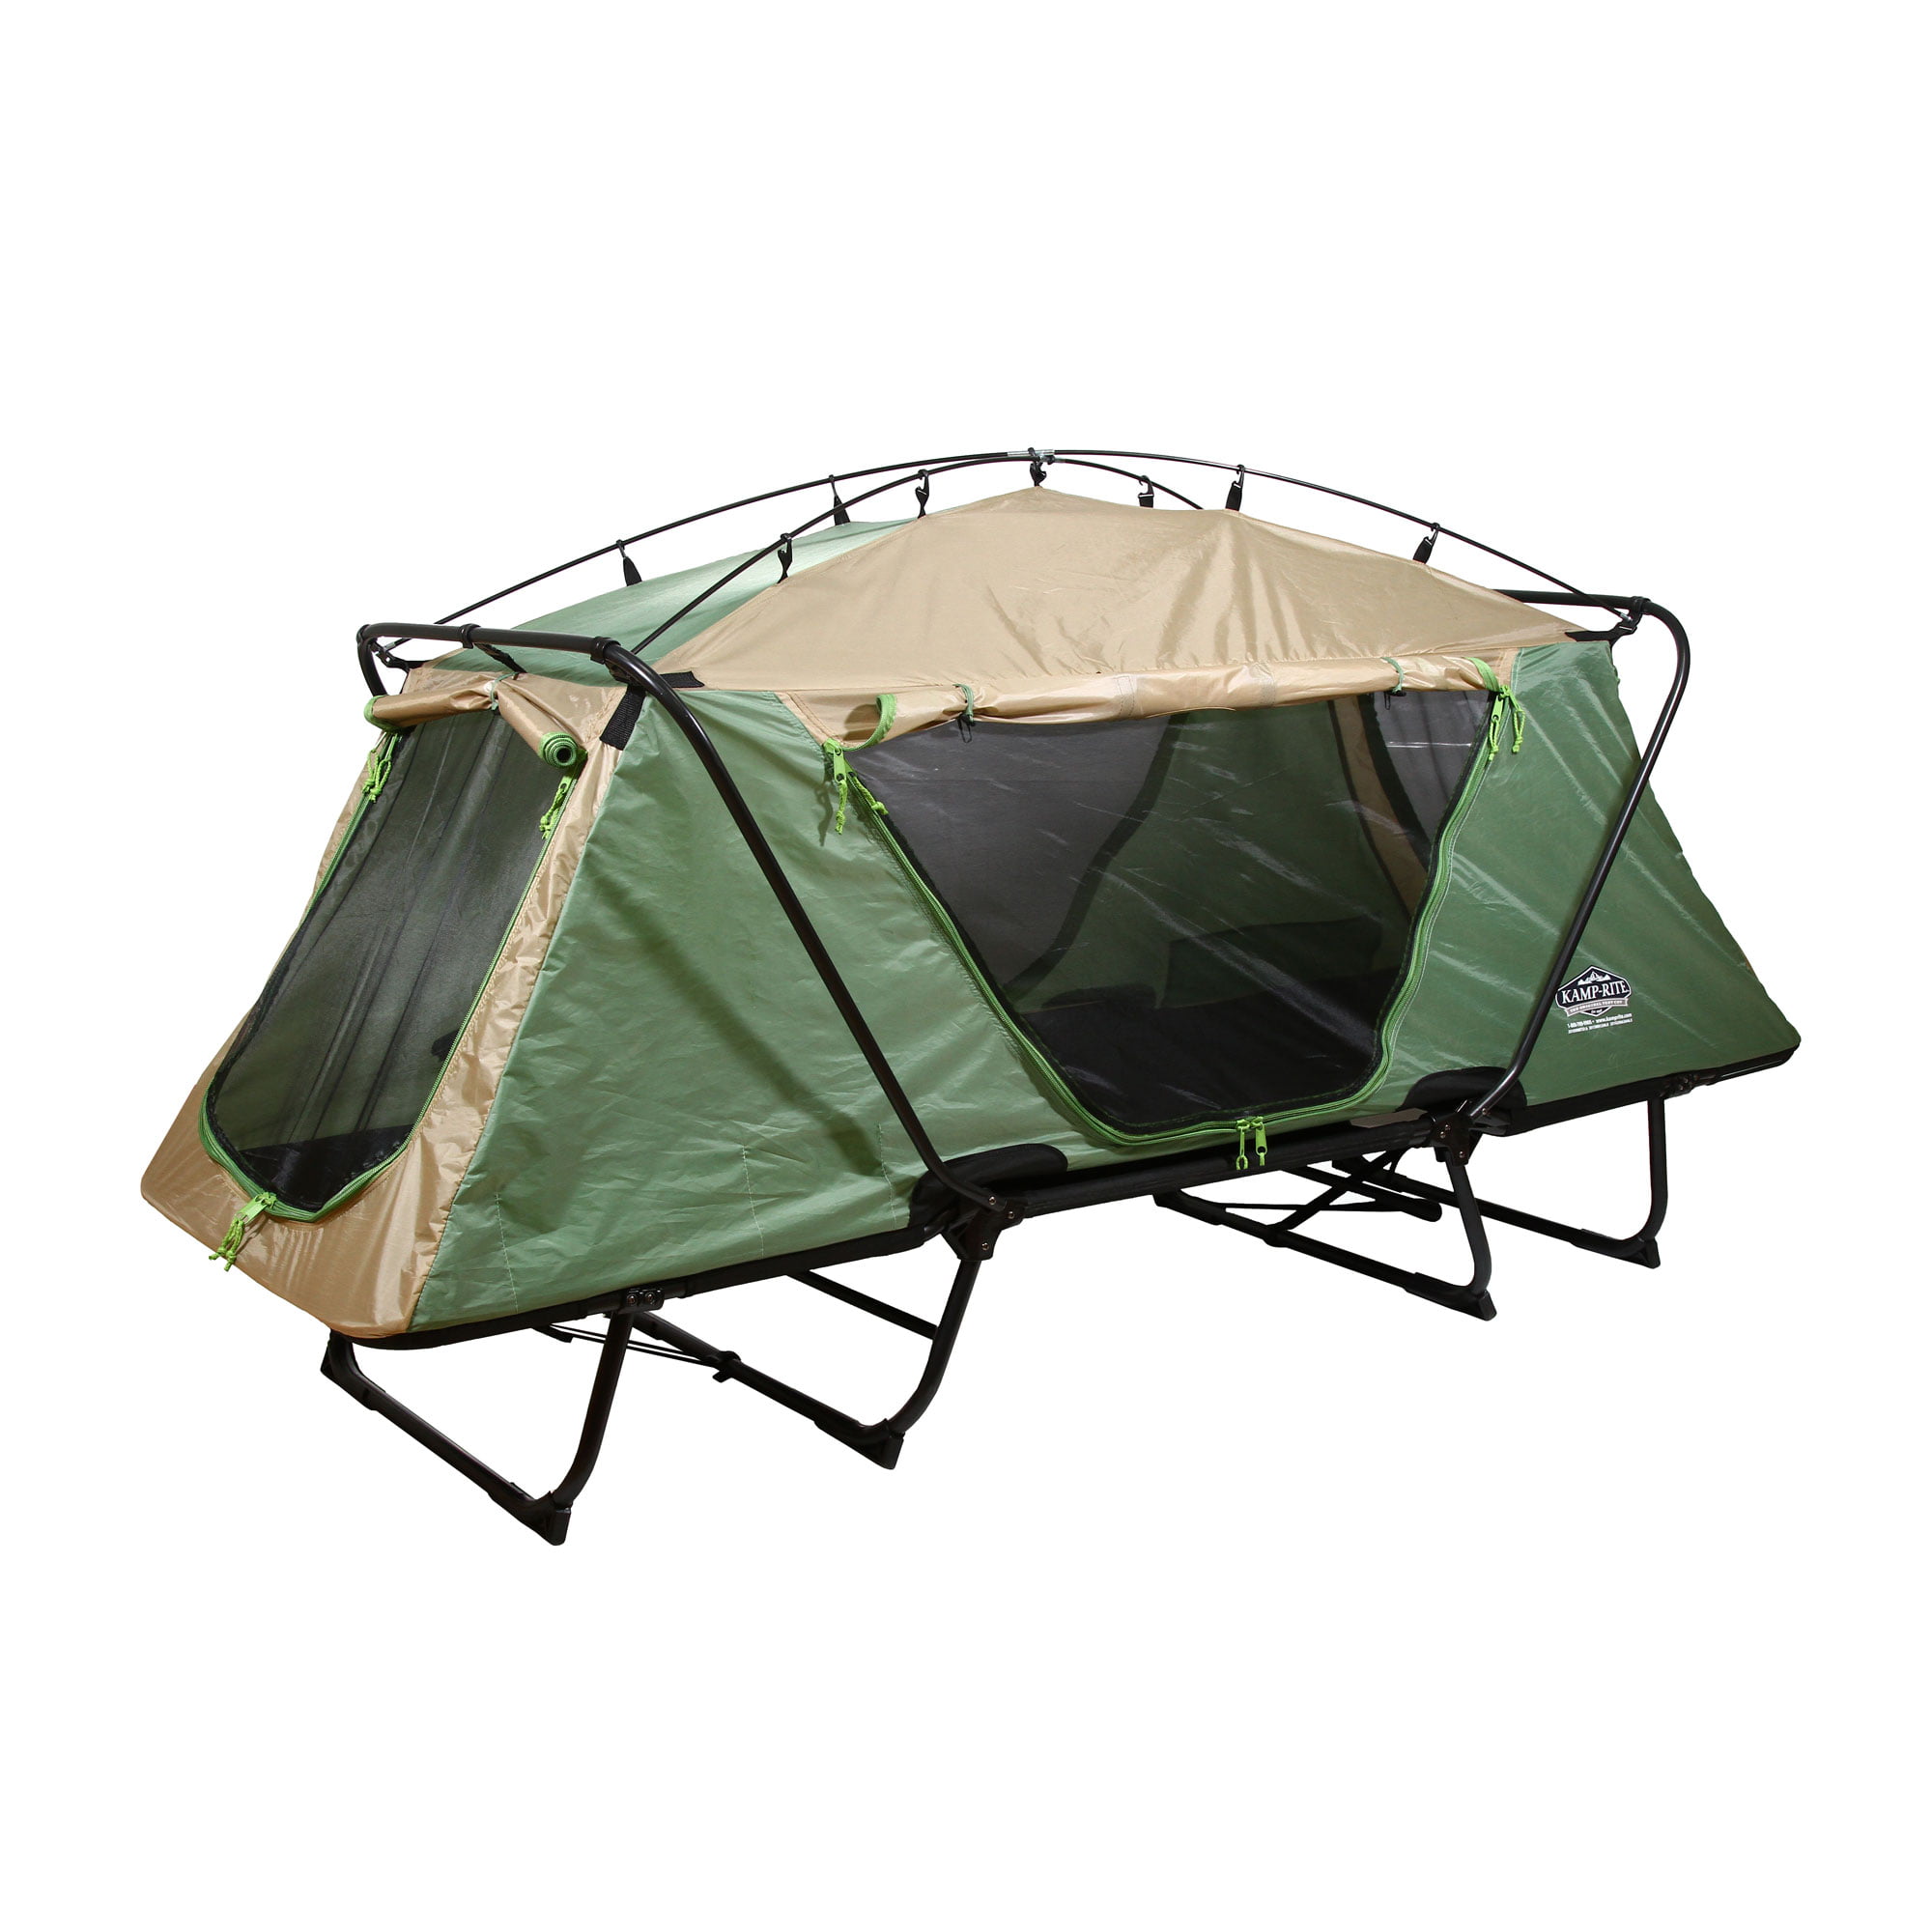 Kamp Rite Oversize Tent Cot Folding Outdoor Camping Hiking Sleeping Bed Tan 